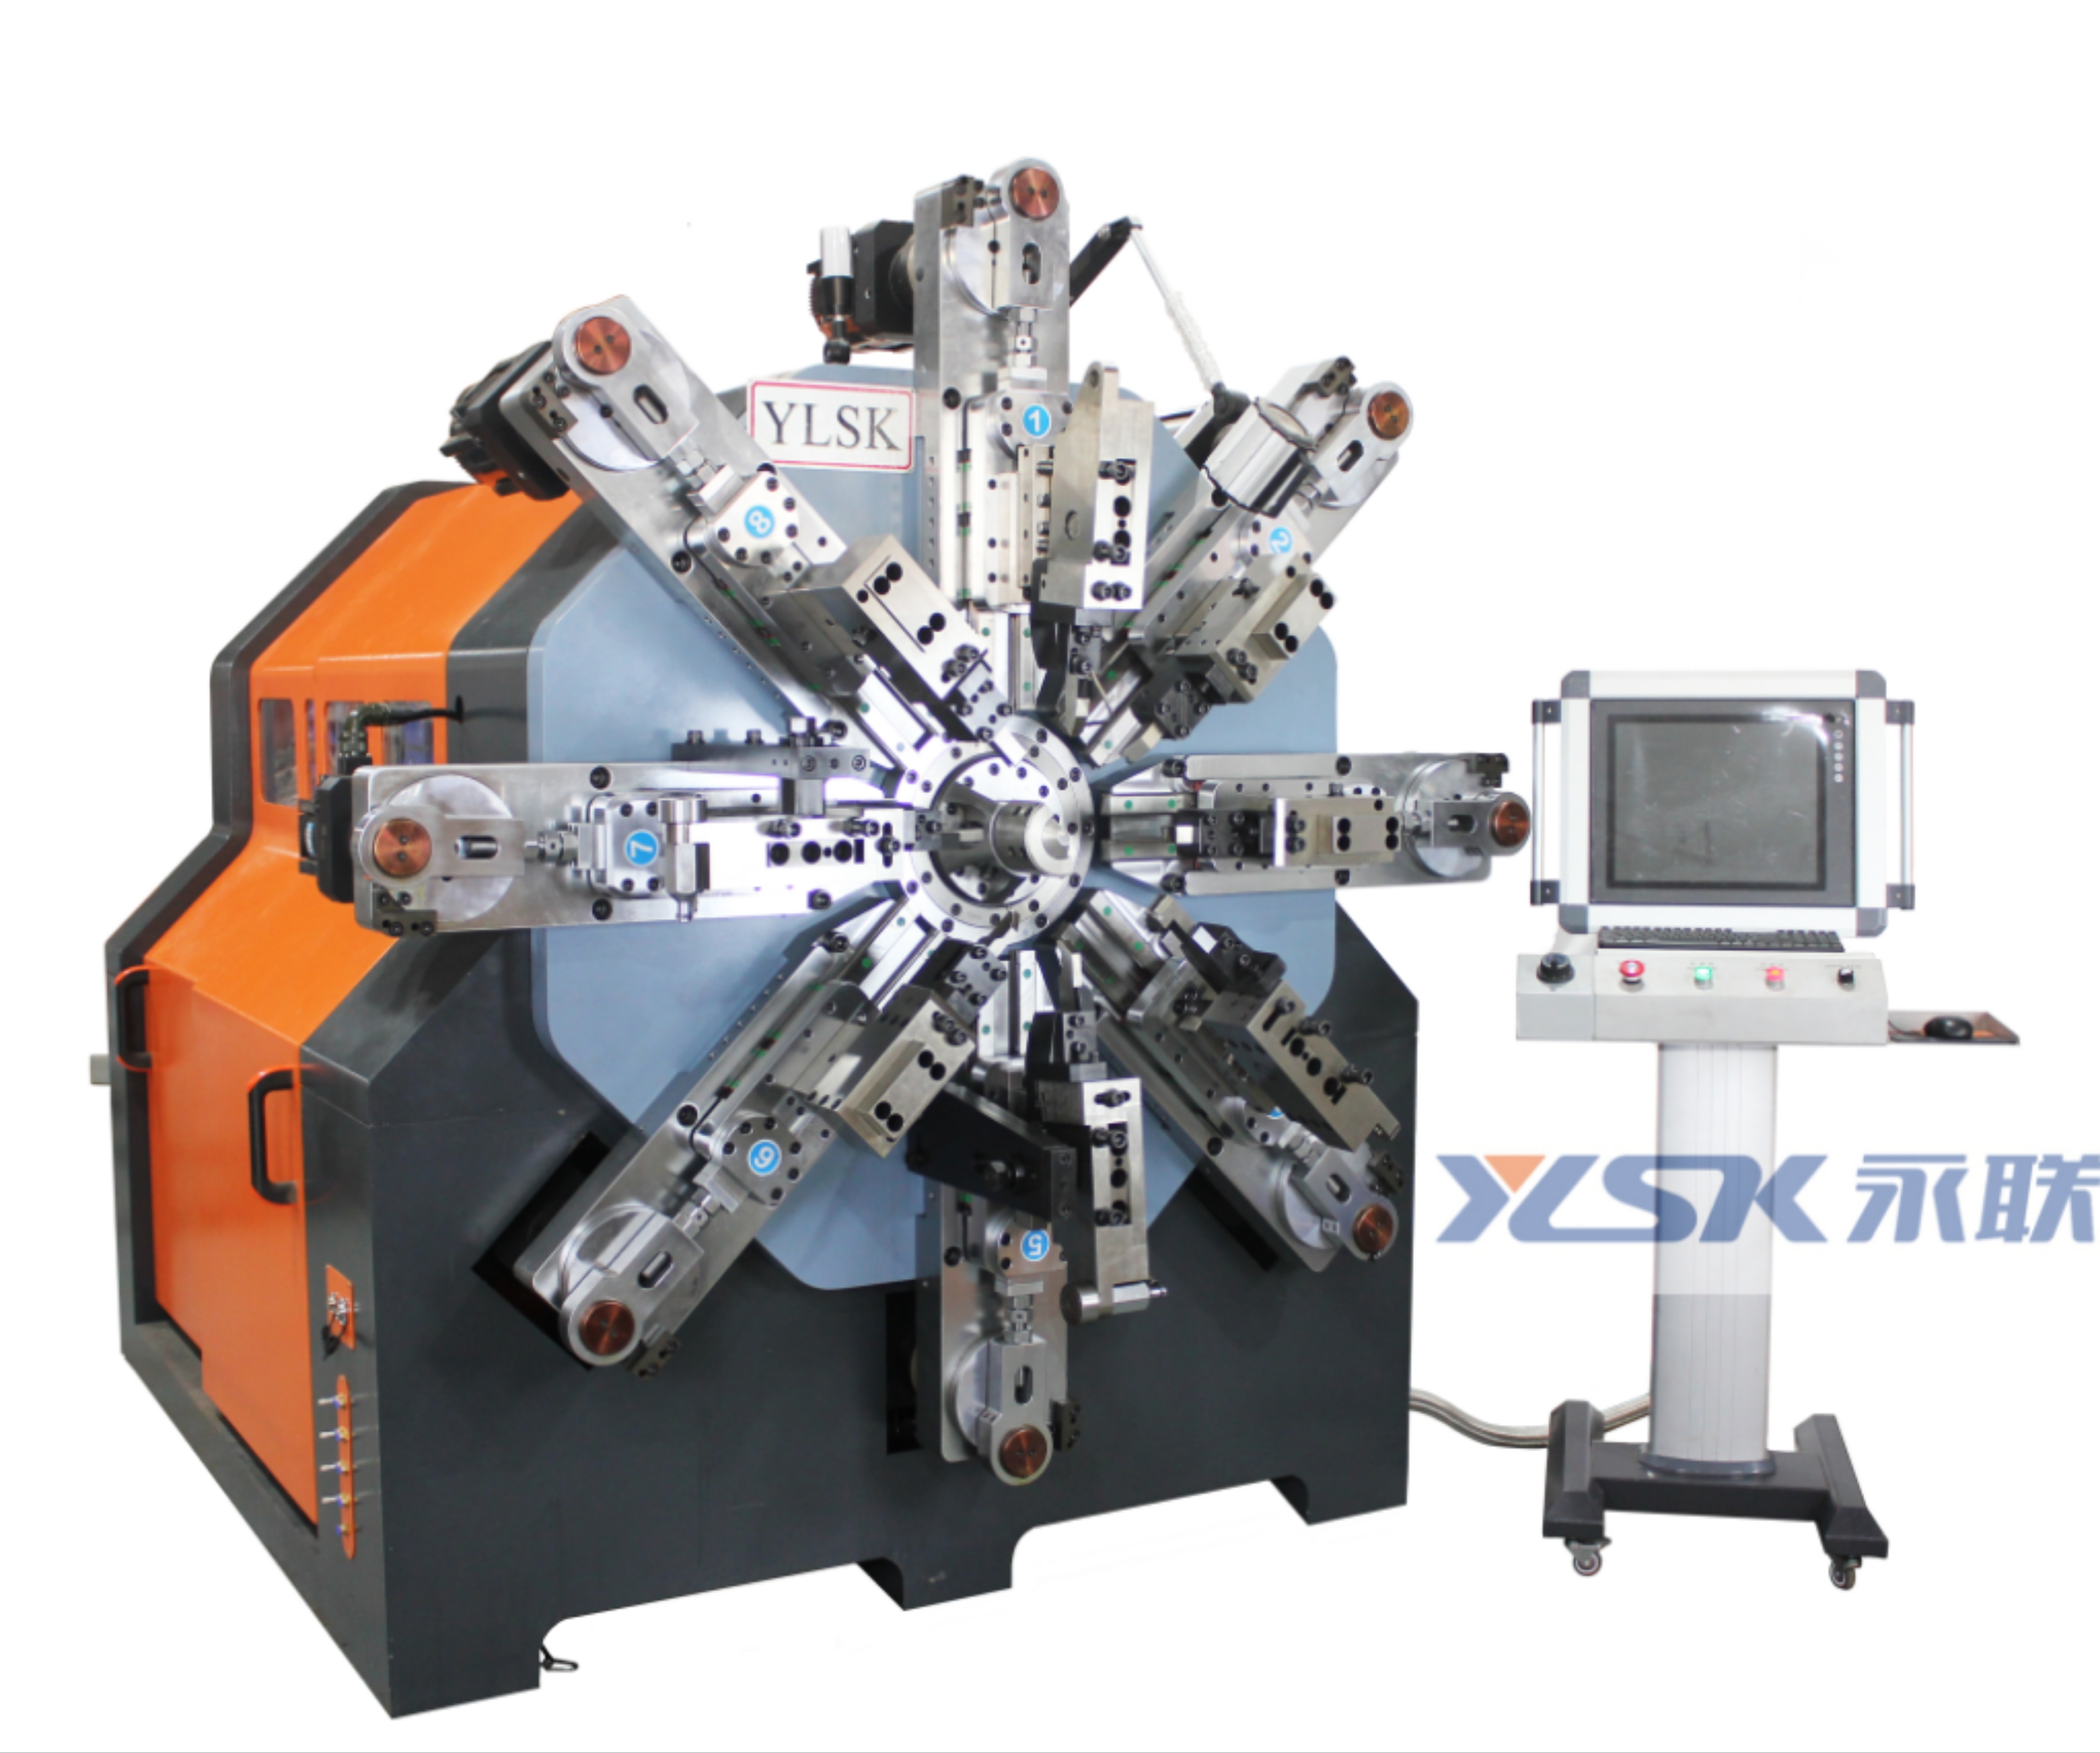 YLSK- 1280 UNIVERSAL CAMLESS SPRING MACHINE